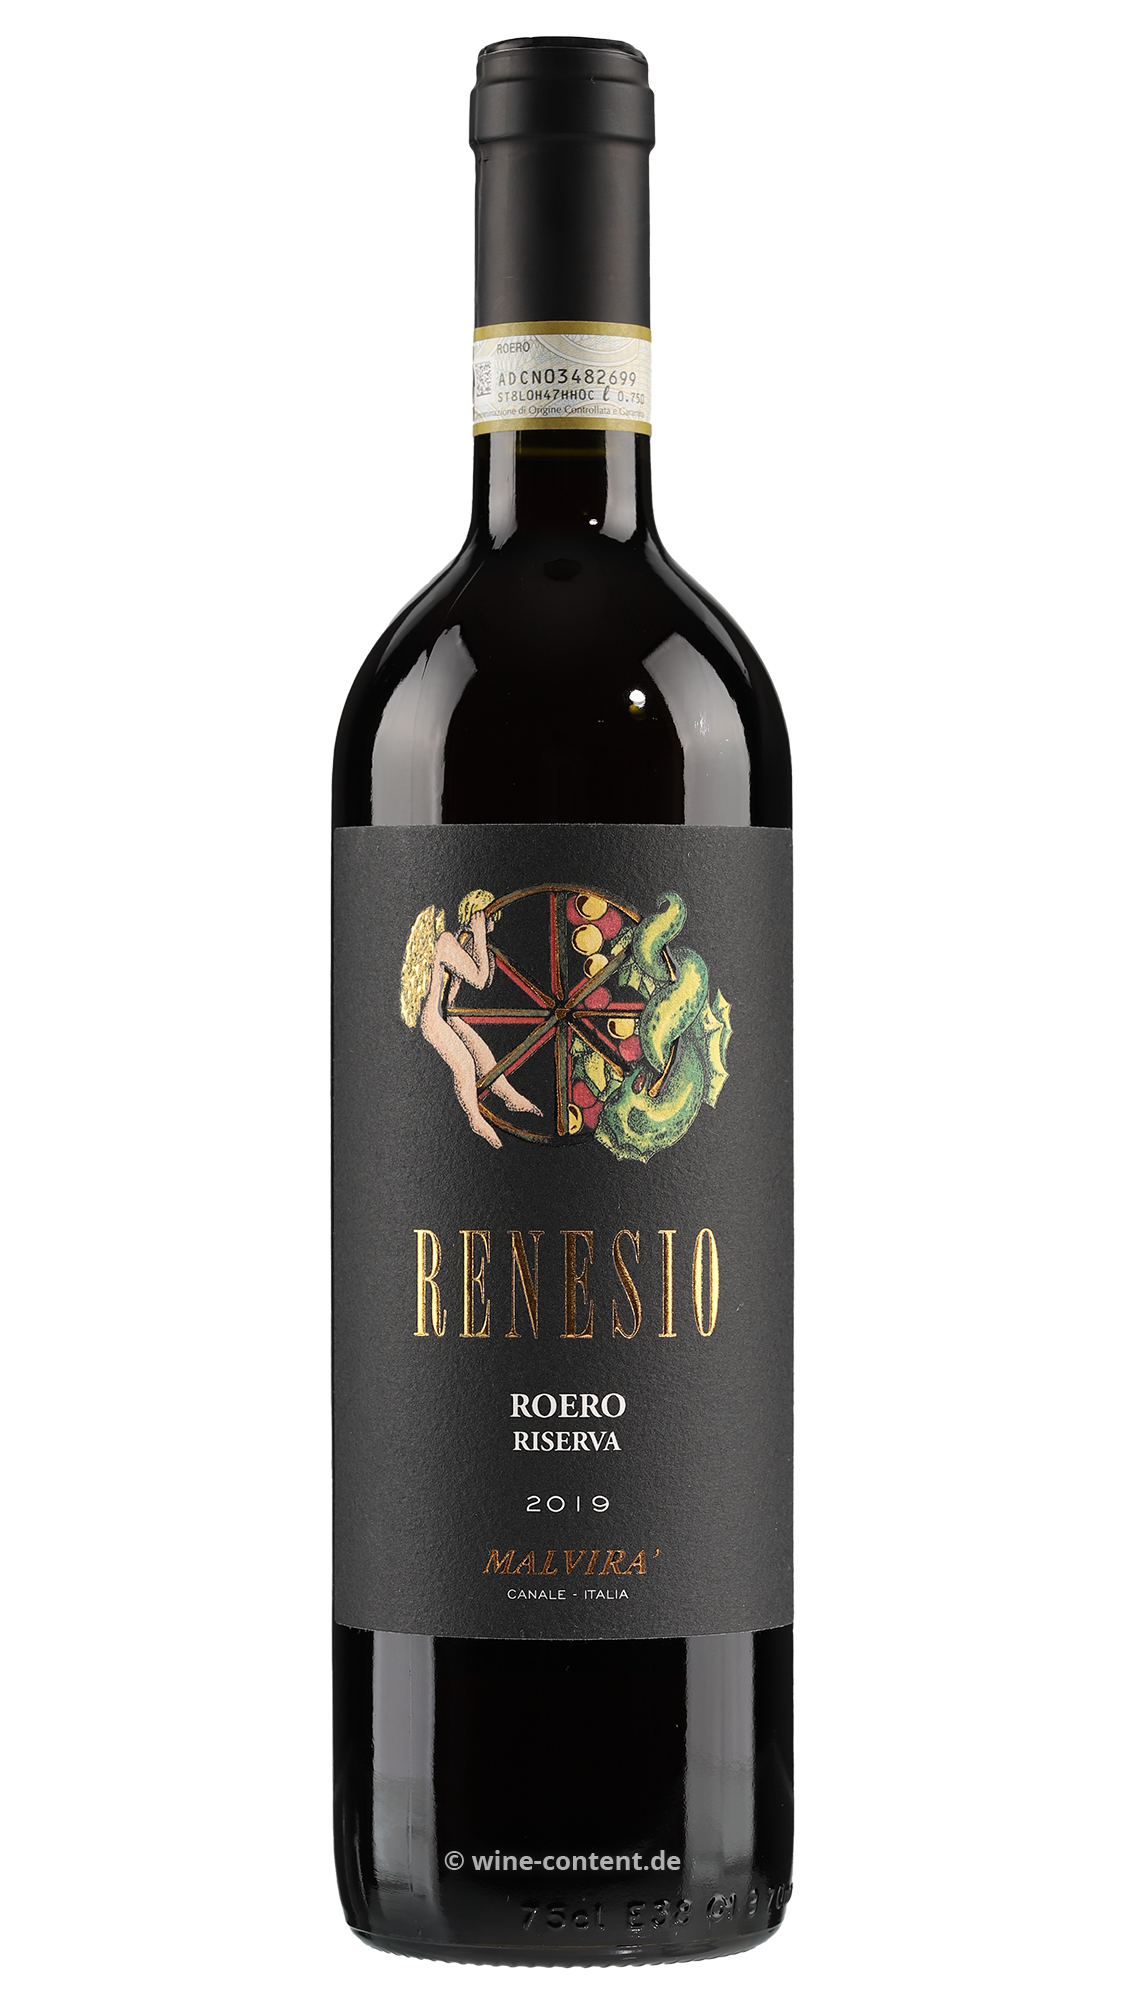 Roero Riserva 2019 Renesio Bio